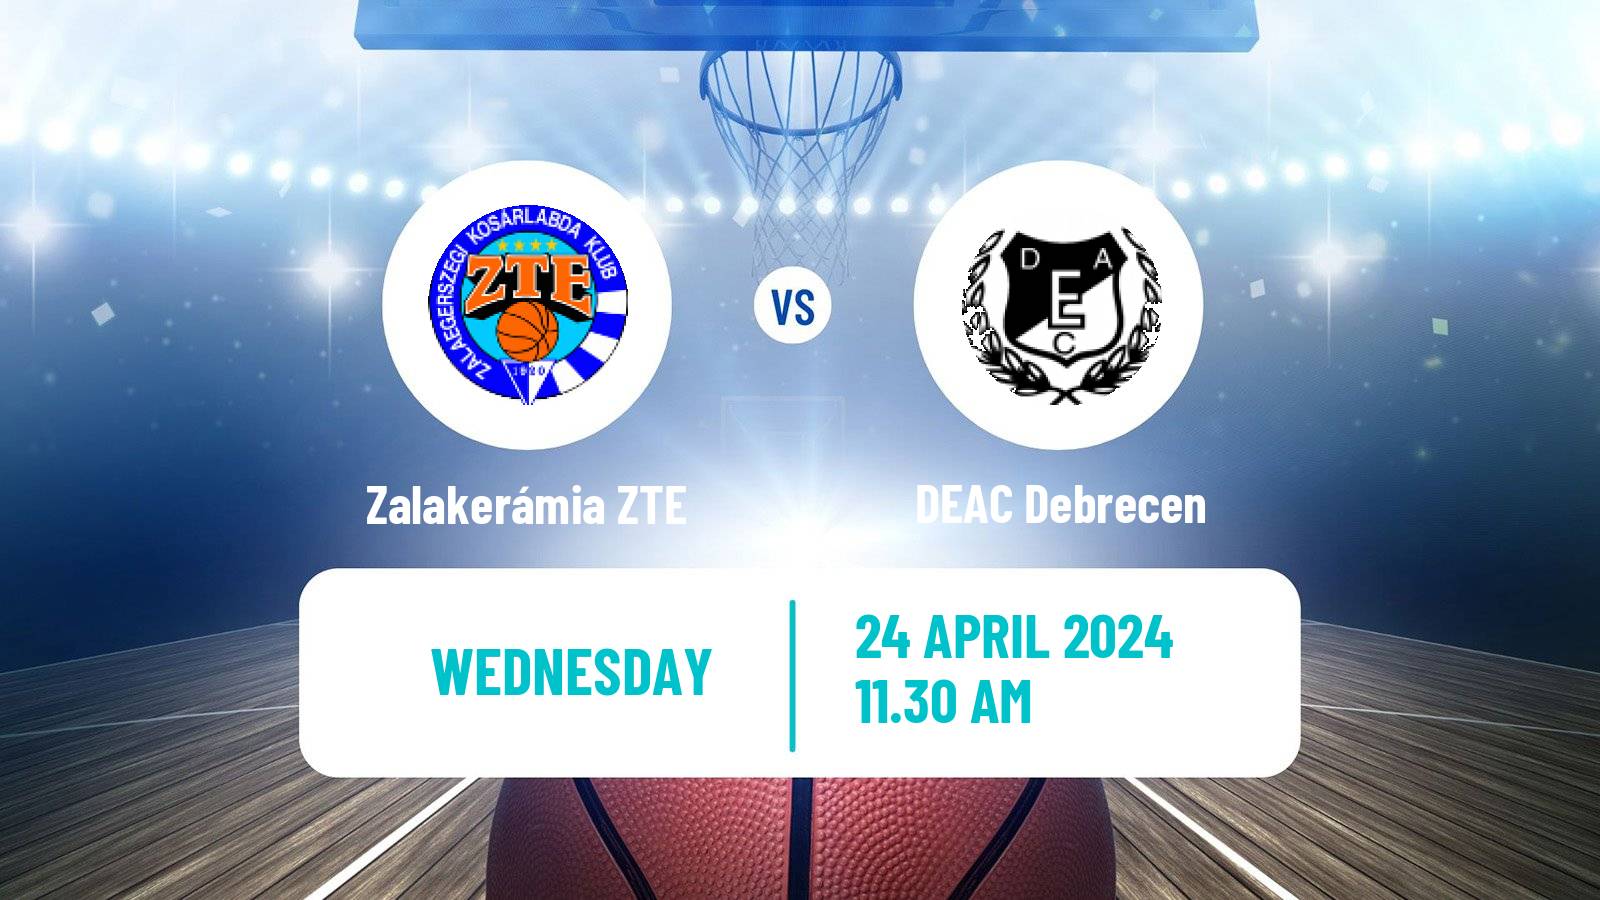 Basketball Hungarian NB I Basketball Zalakerámia ZTE - DEAC Debrecen